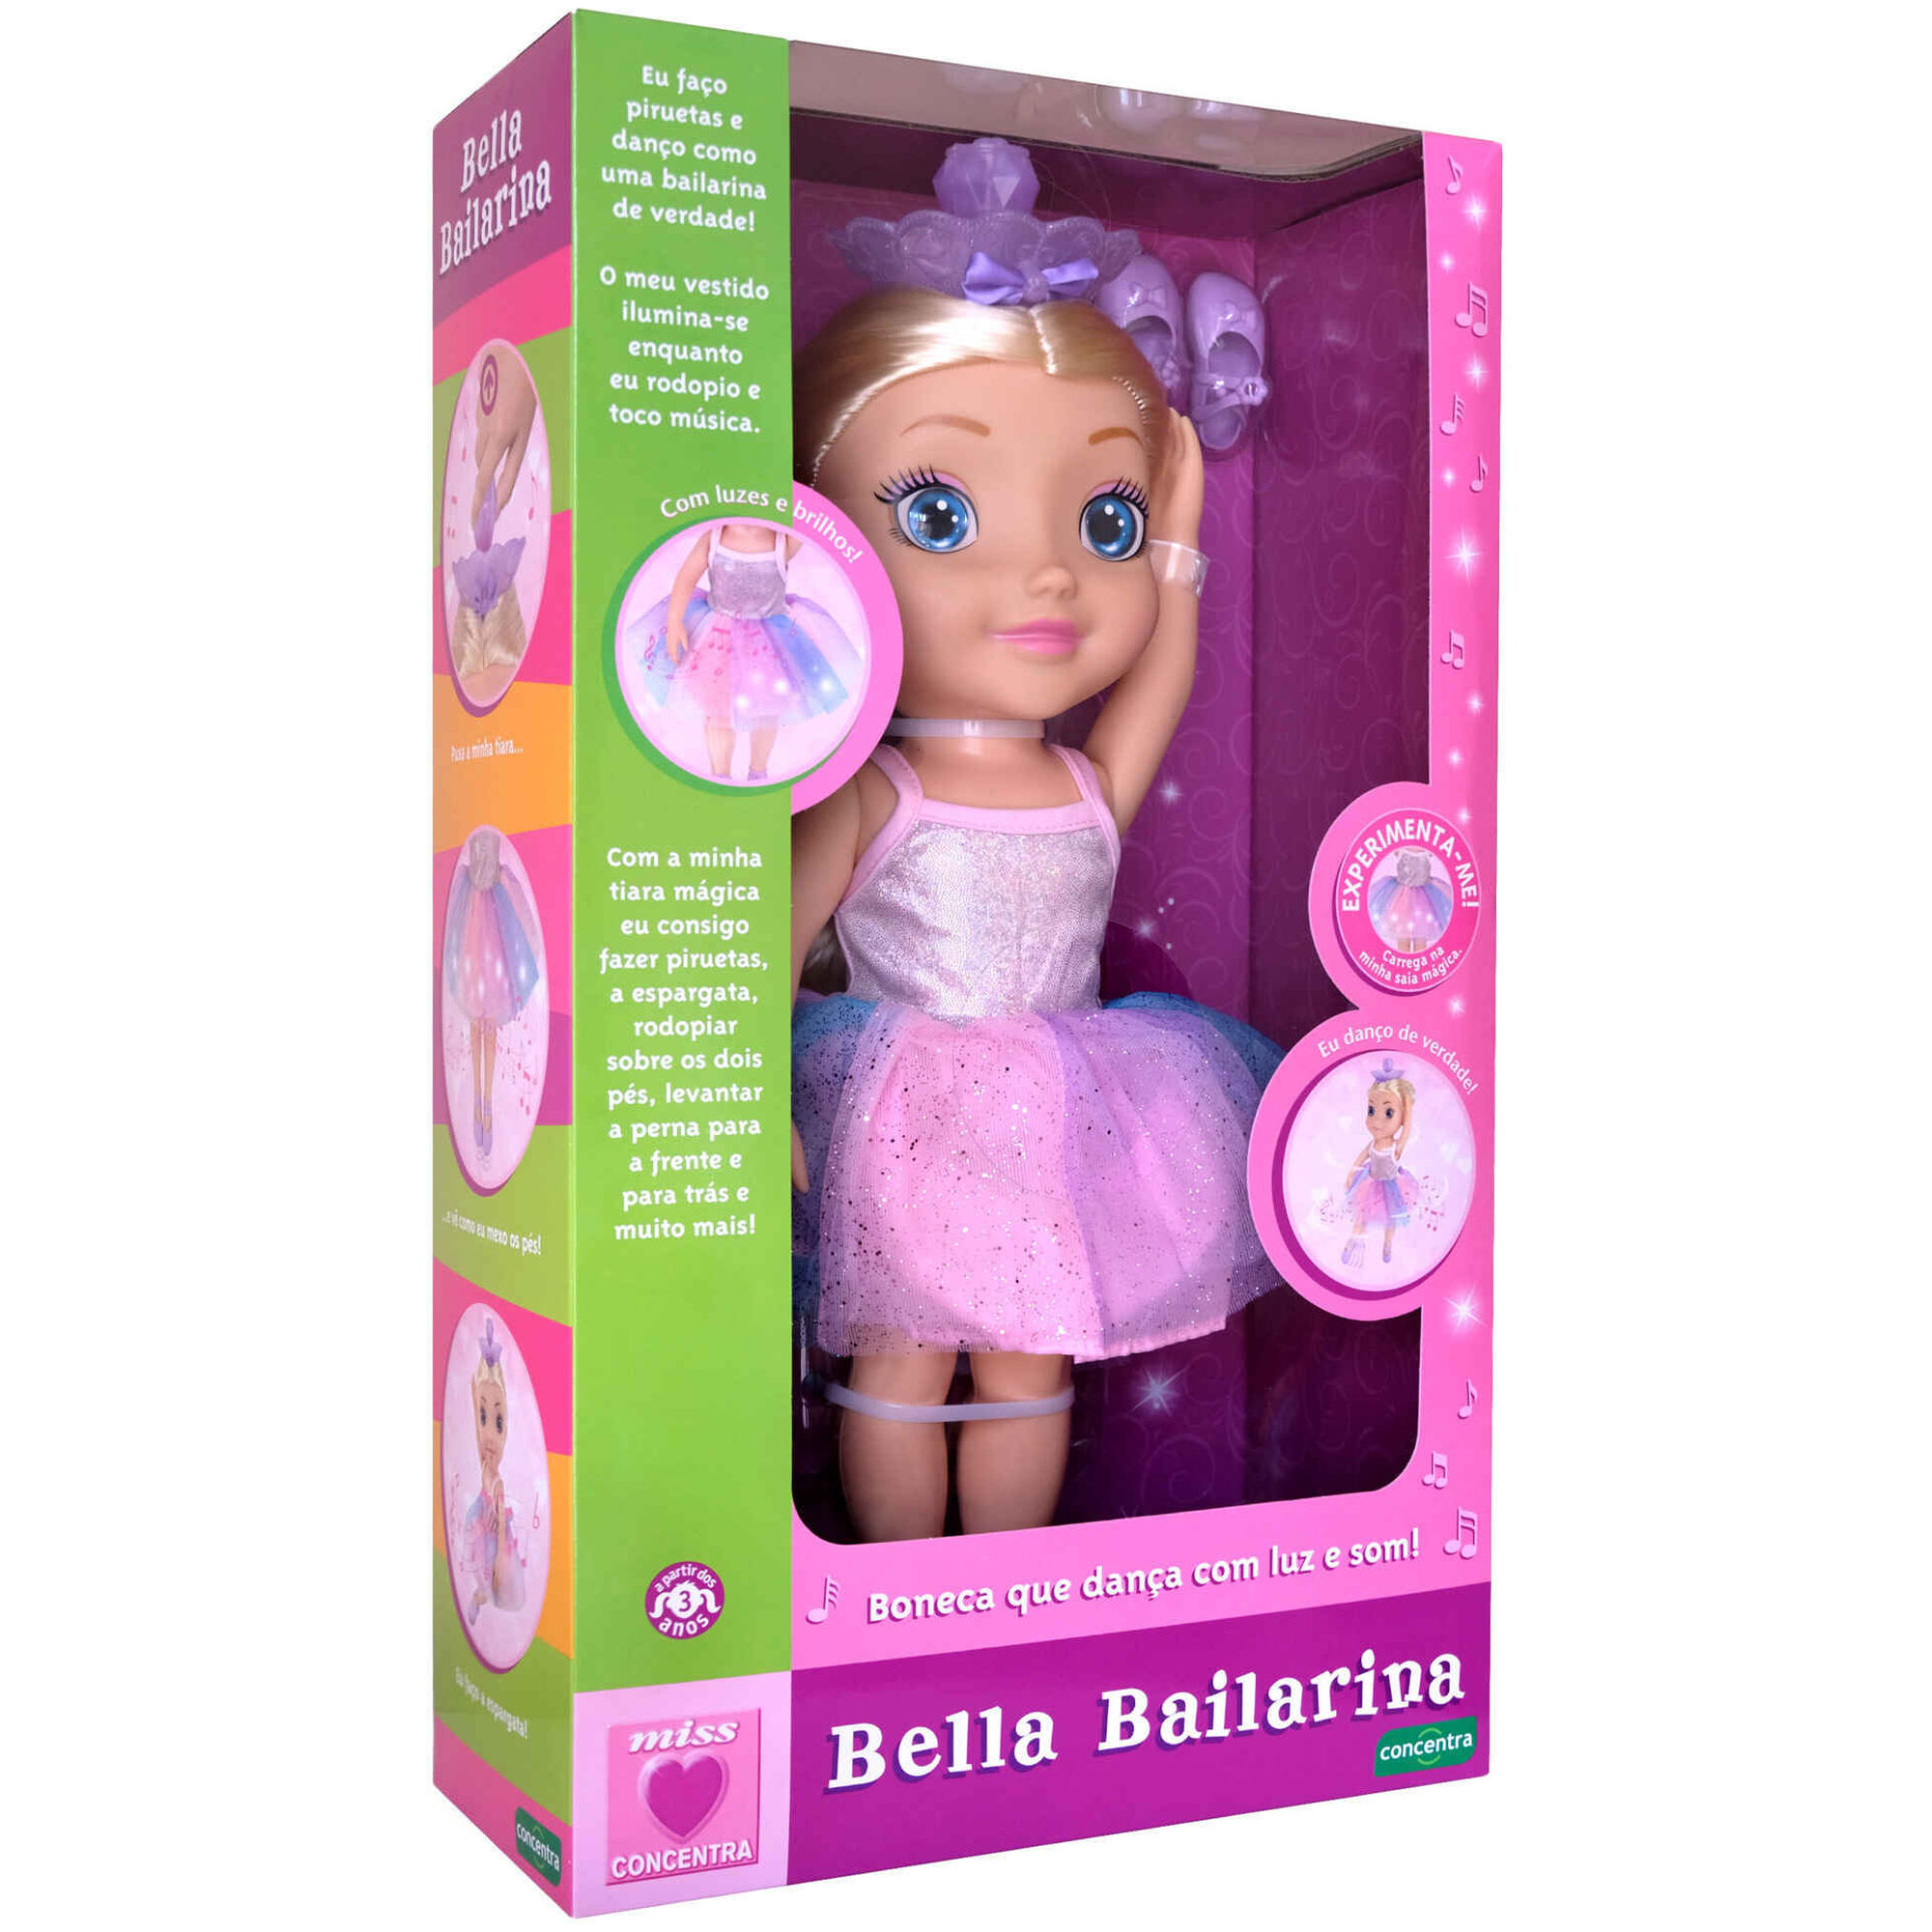 Fantasia infantil similar Barbie com saia de tutu infantil e adulto